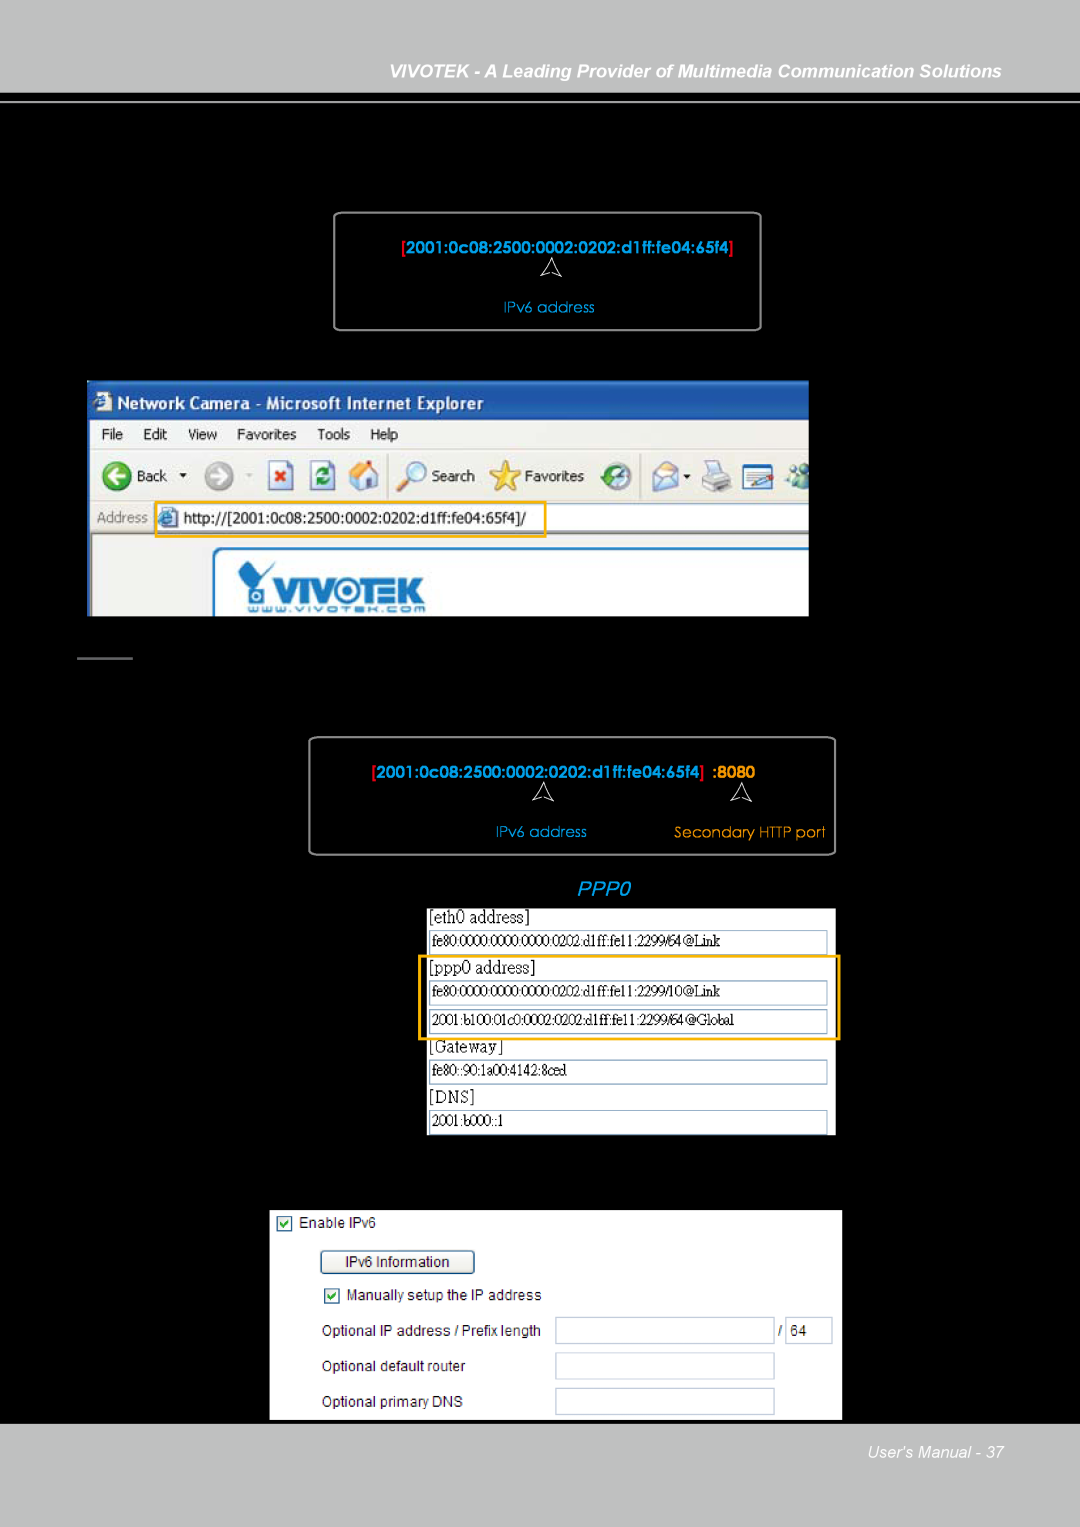 Vivotek IP7130 manual Please follow the steps below to link to an IPv6 address 